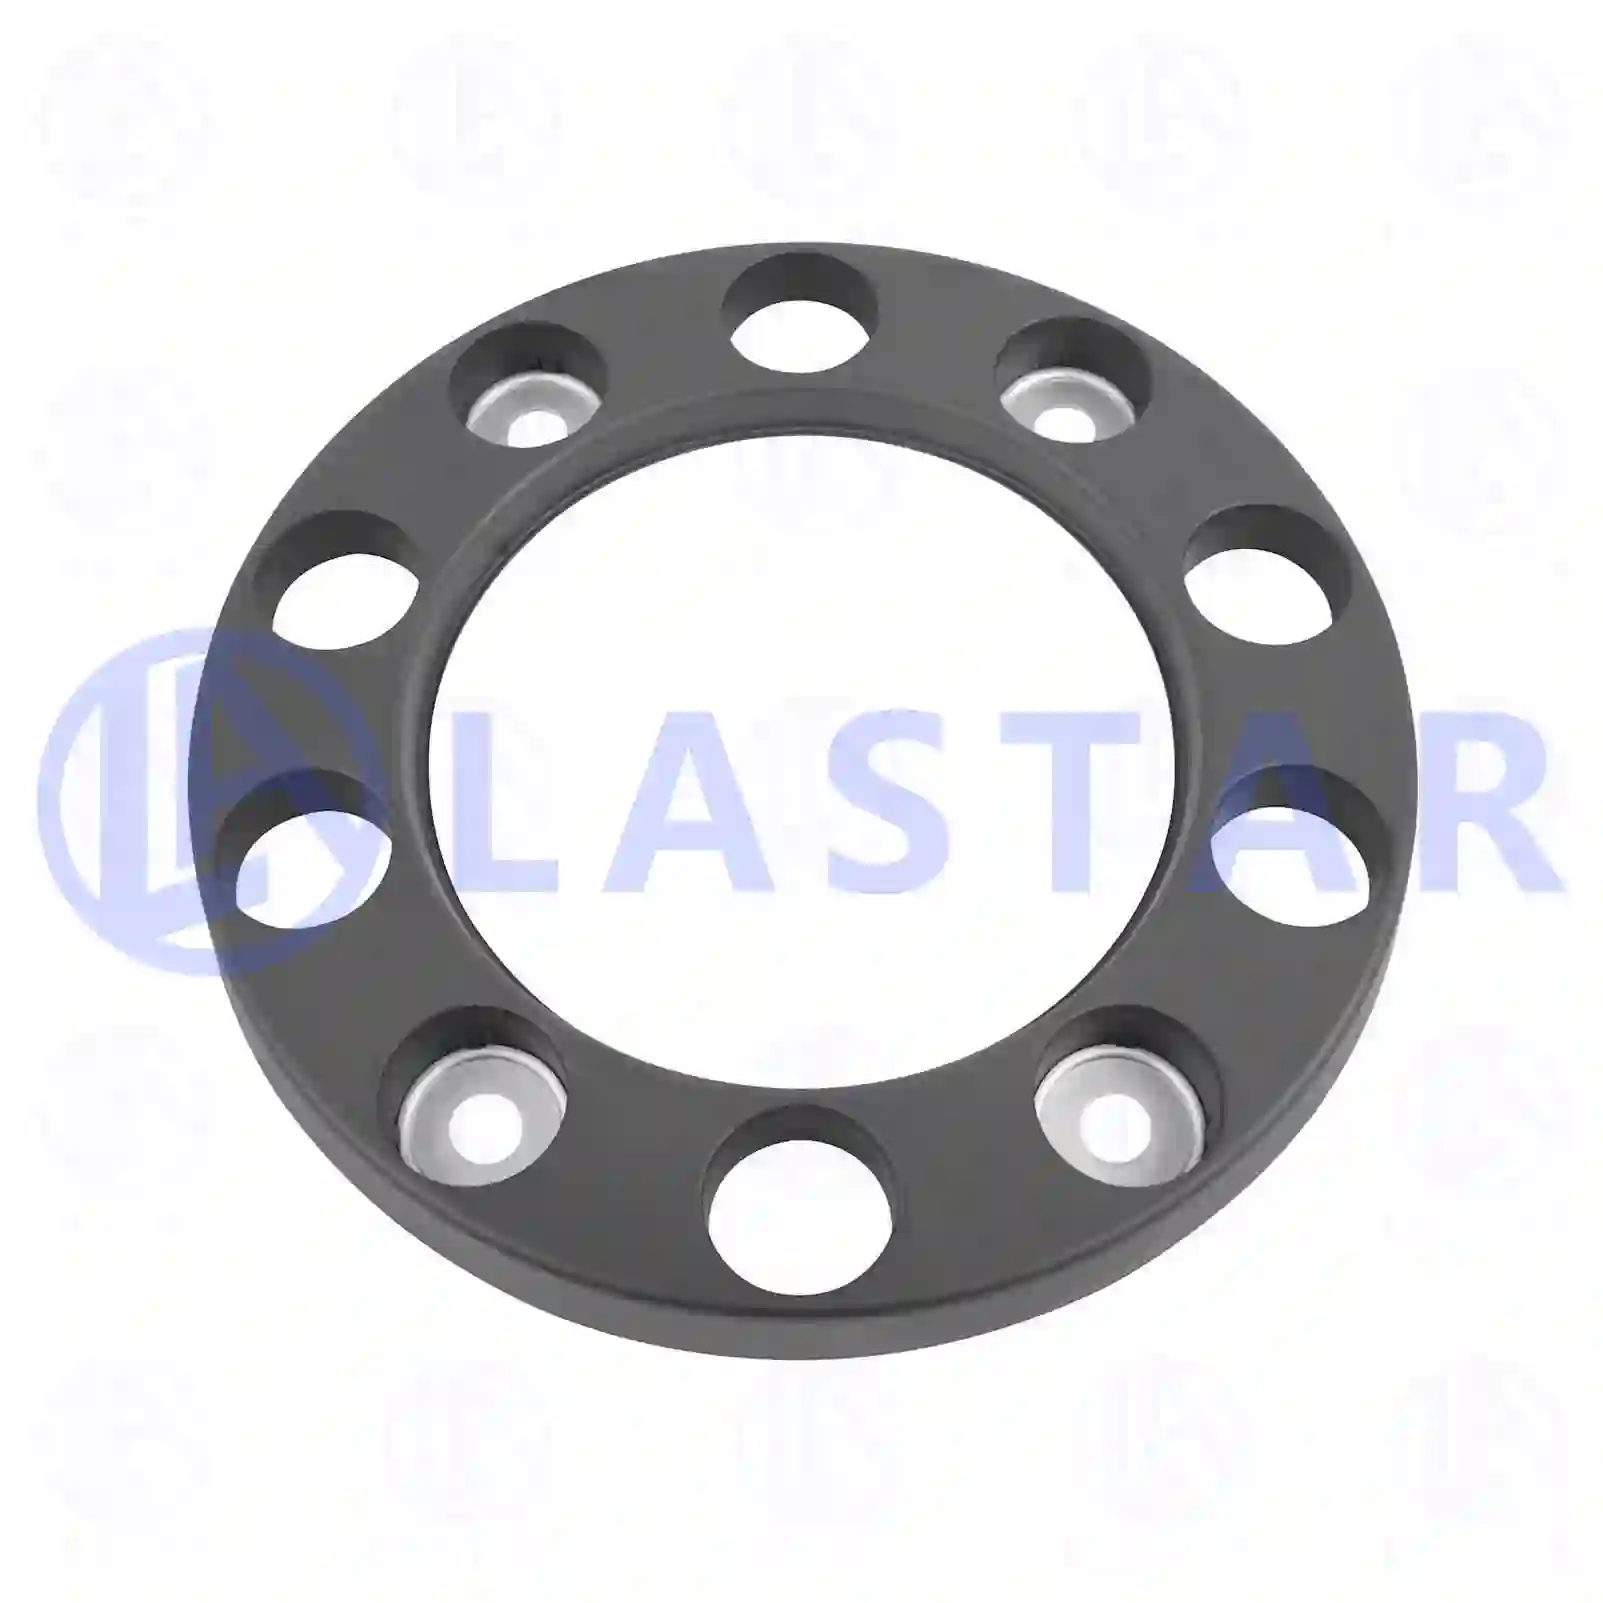  Wheel cover, plastic || Lastar Spare Part | Truck Spare Parts, Auotomotive Spare Parts